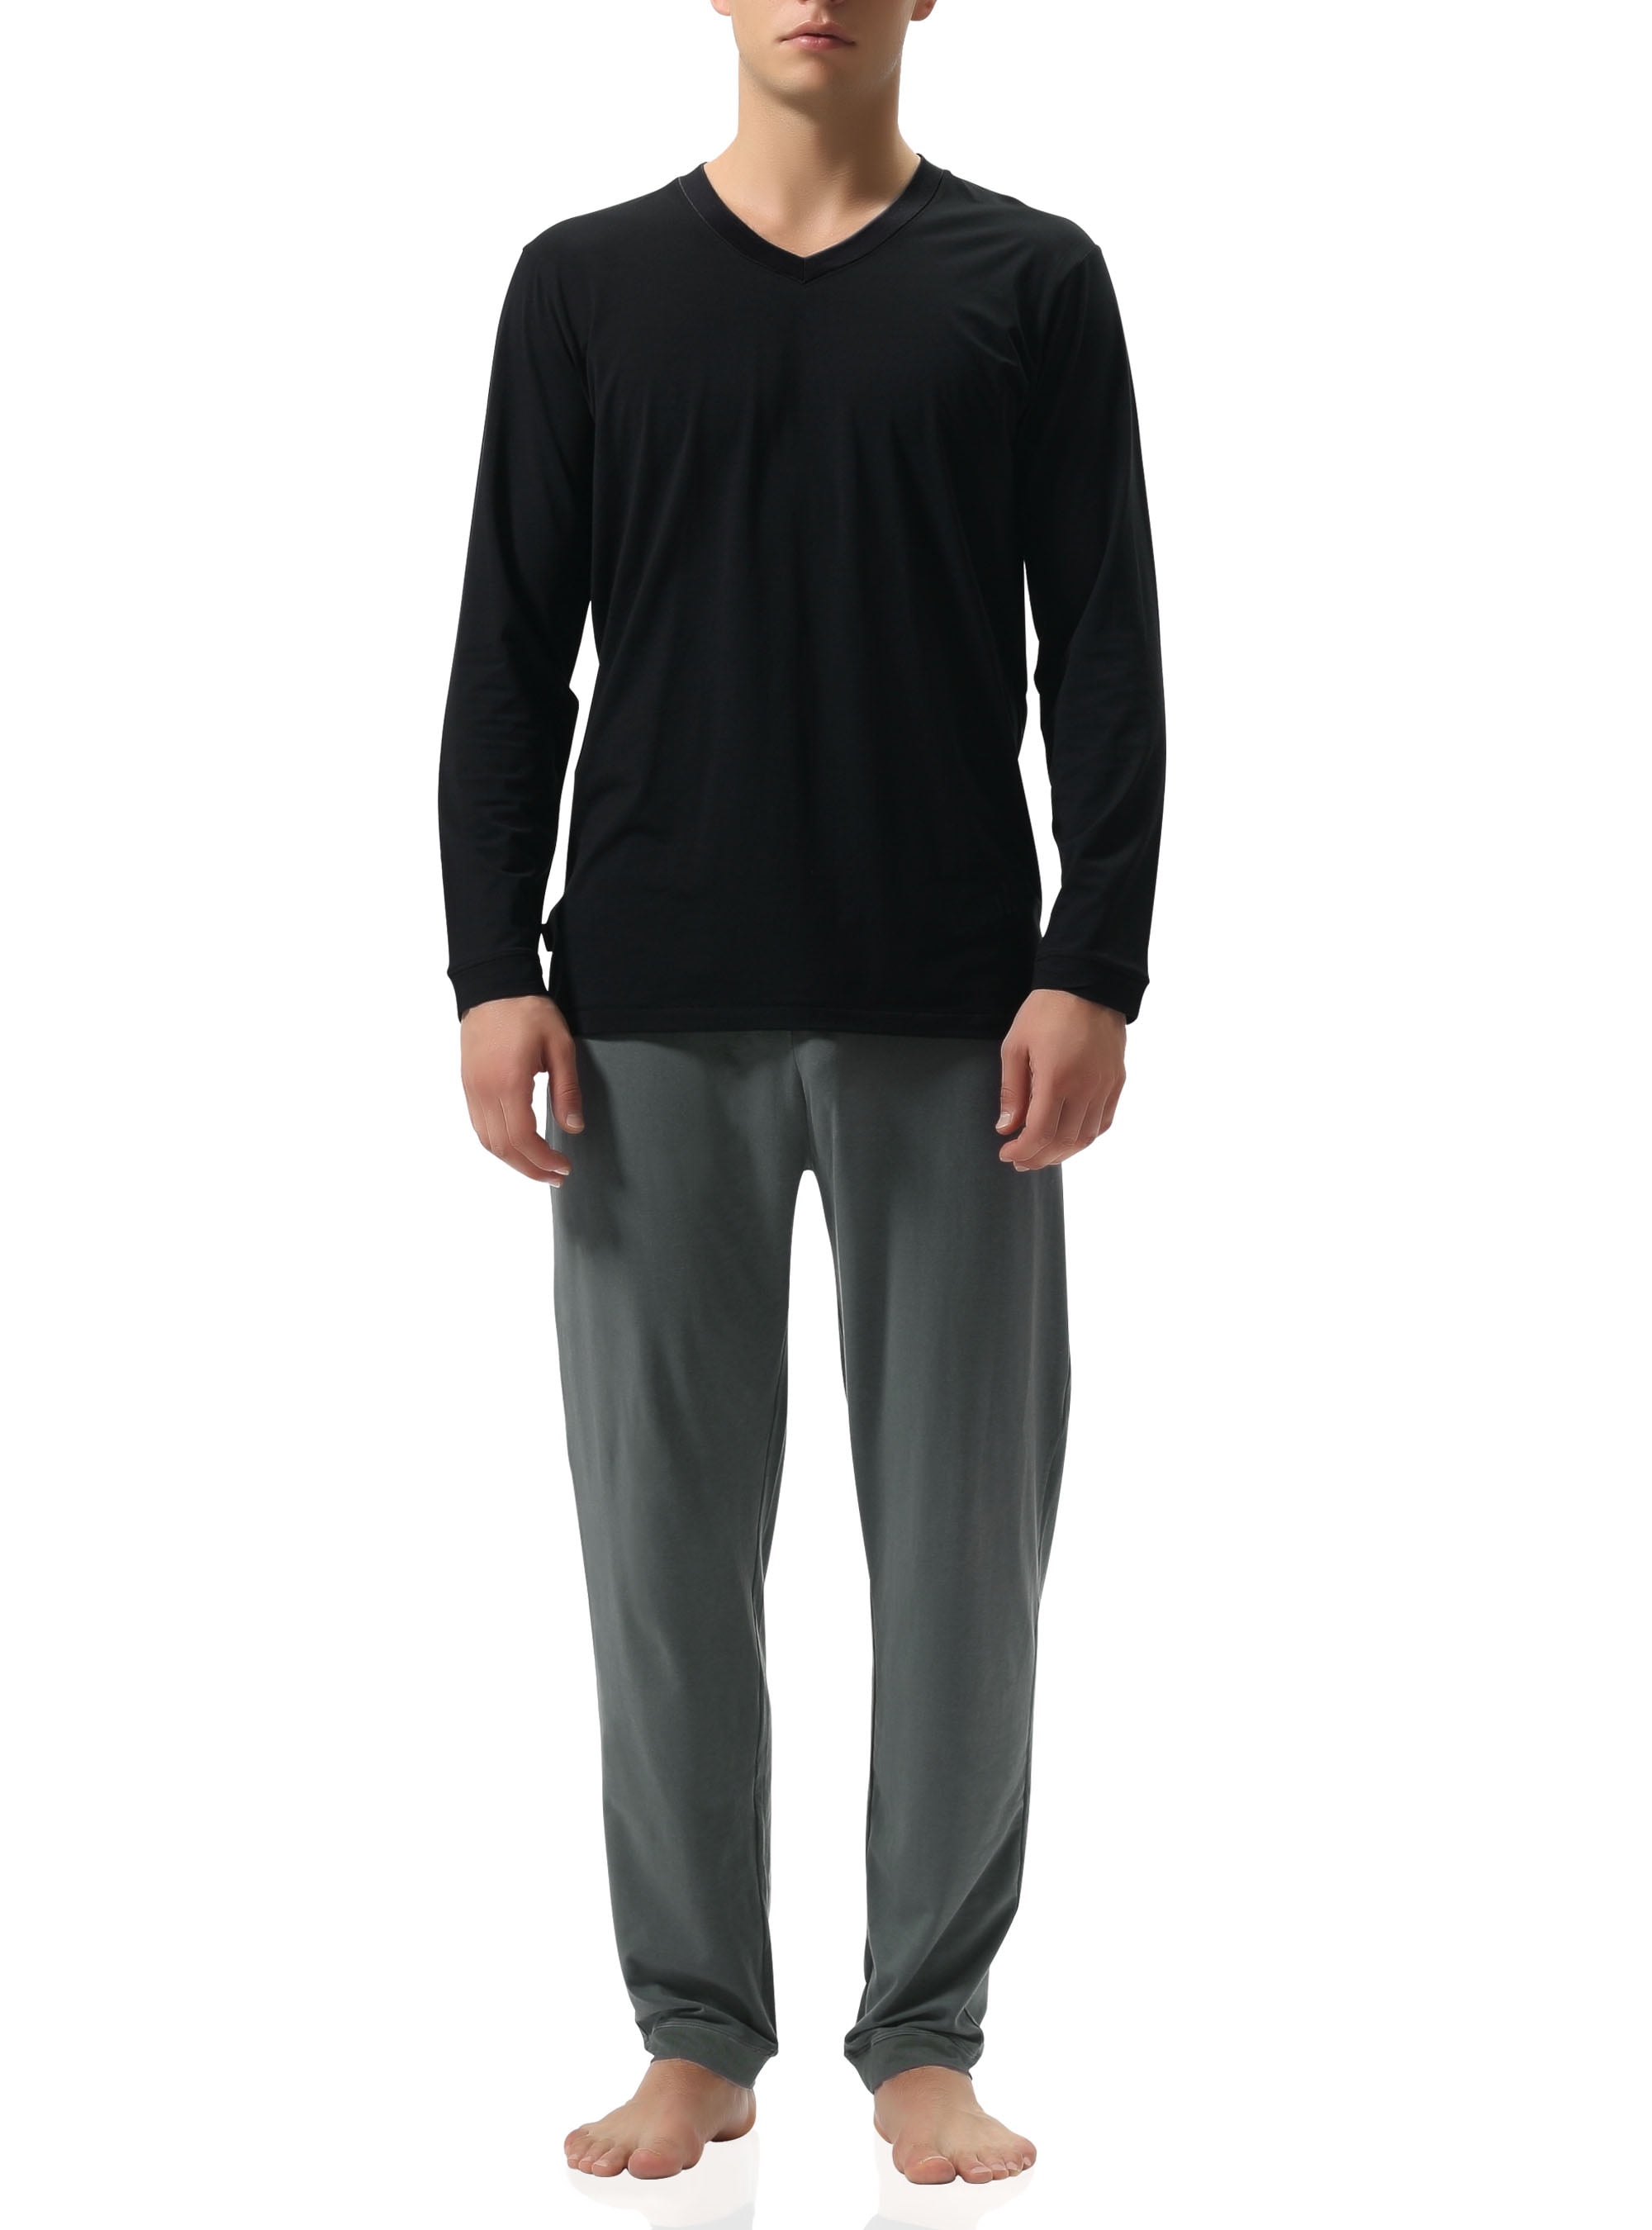 DAVID ARCHY Adult Men's Sleepwear Comfort Soft Cotton Long Sleeve ...